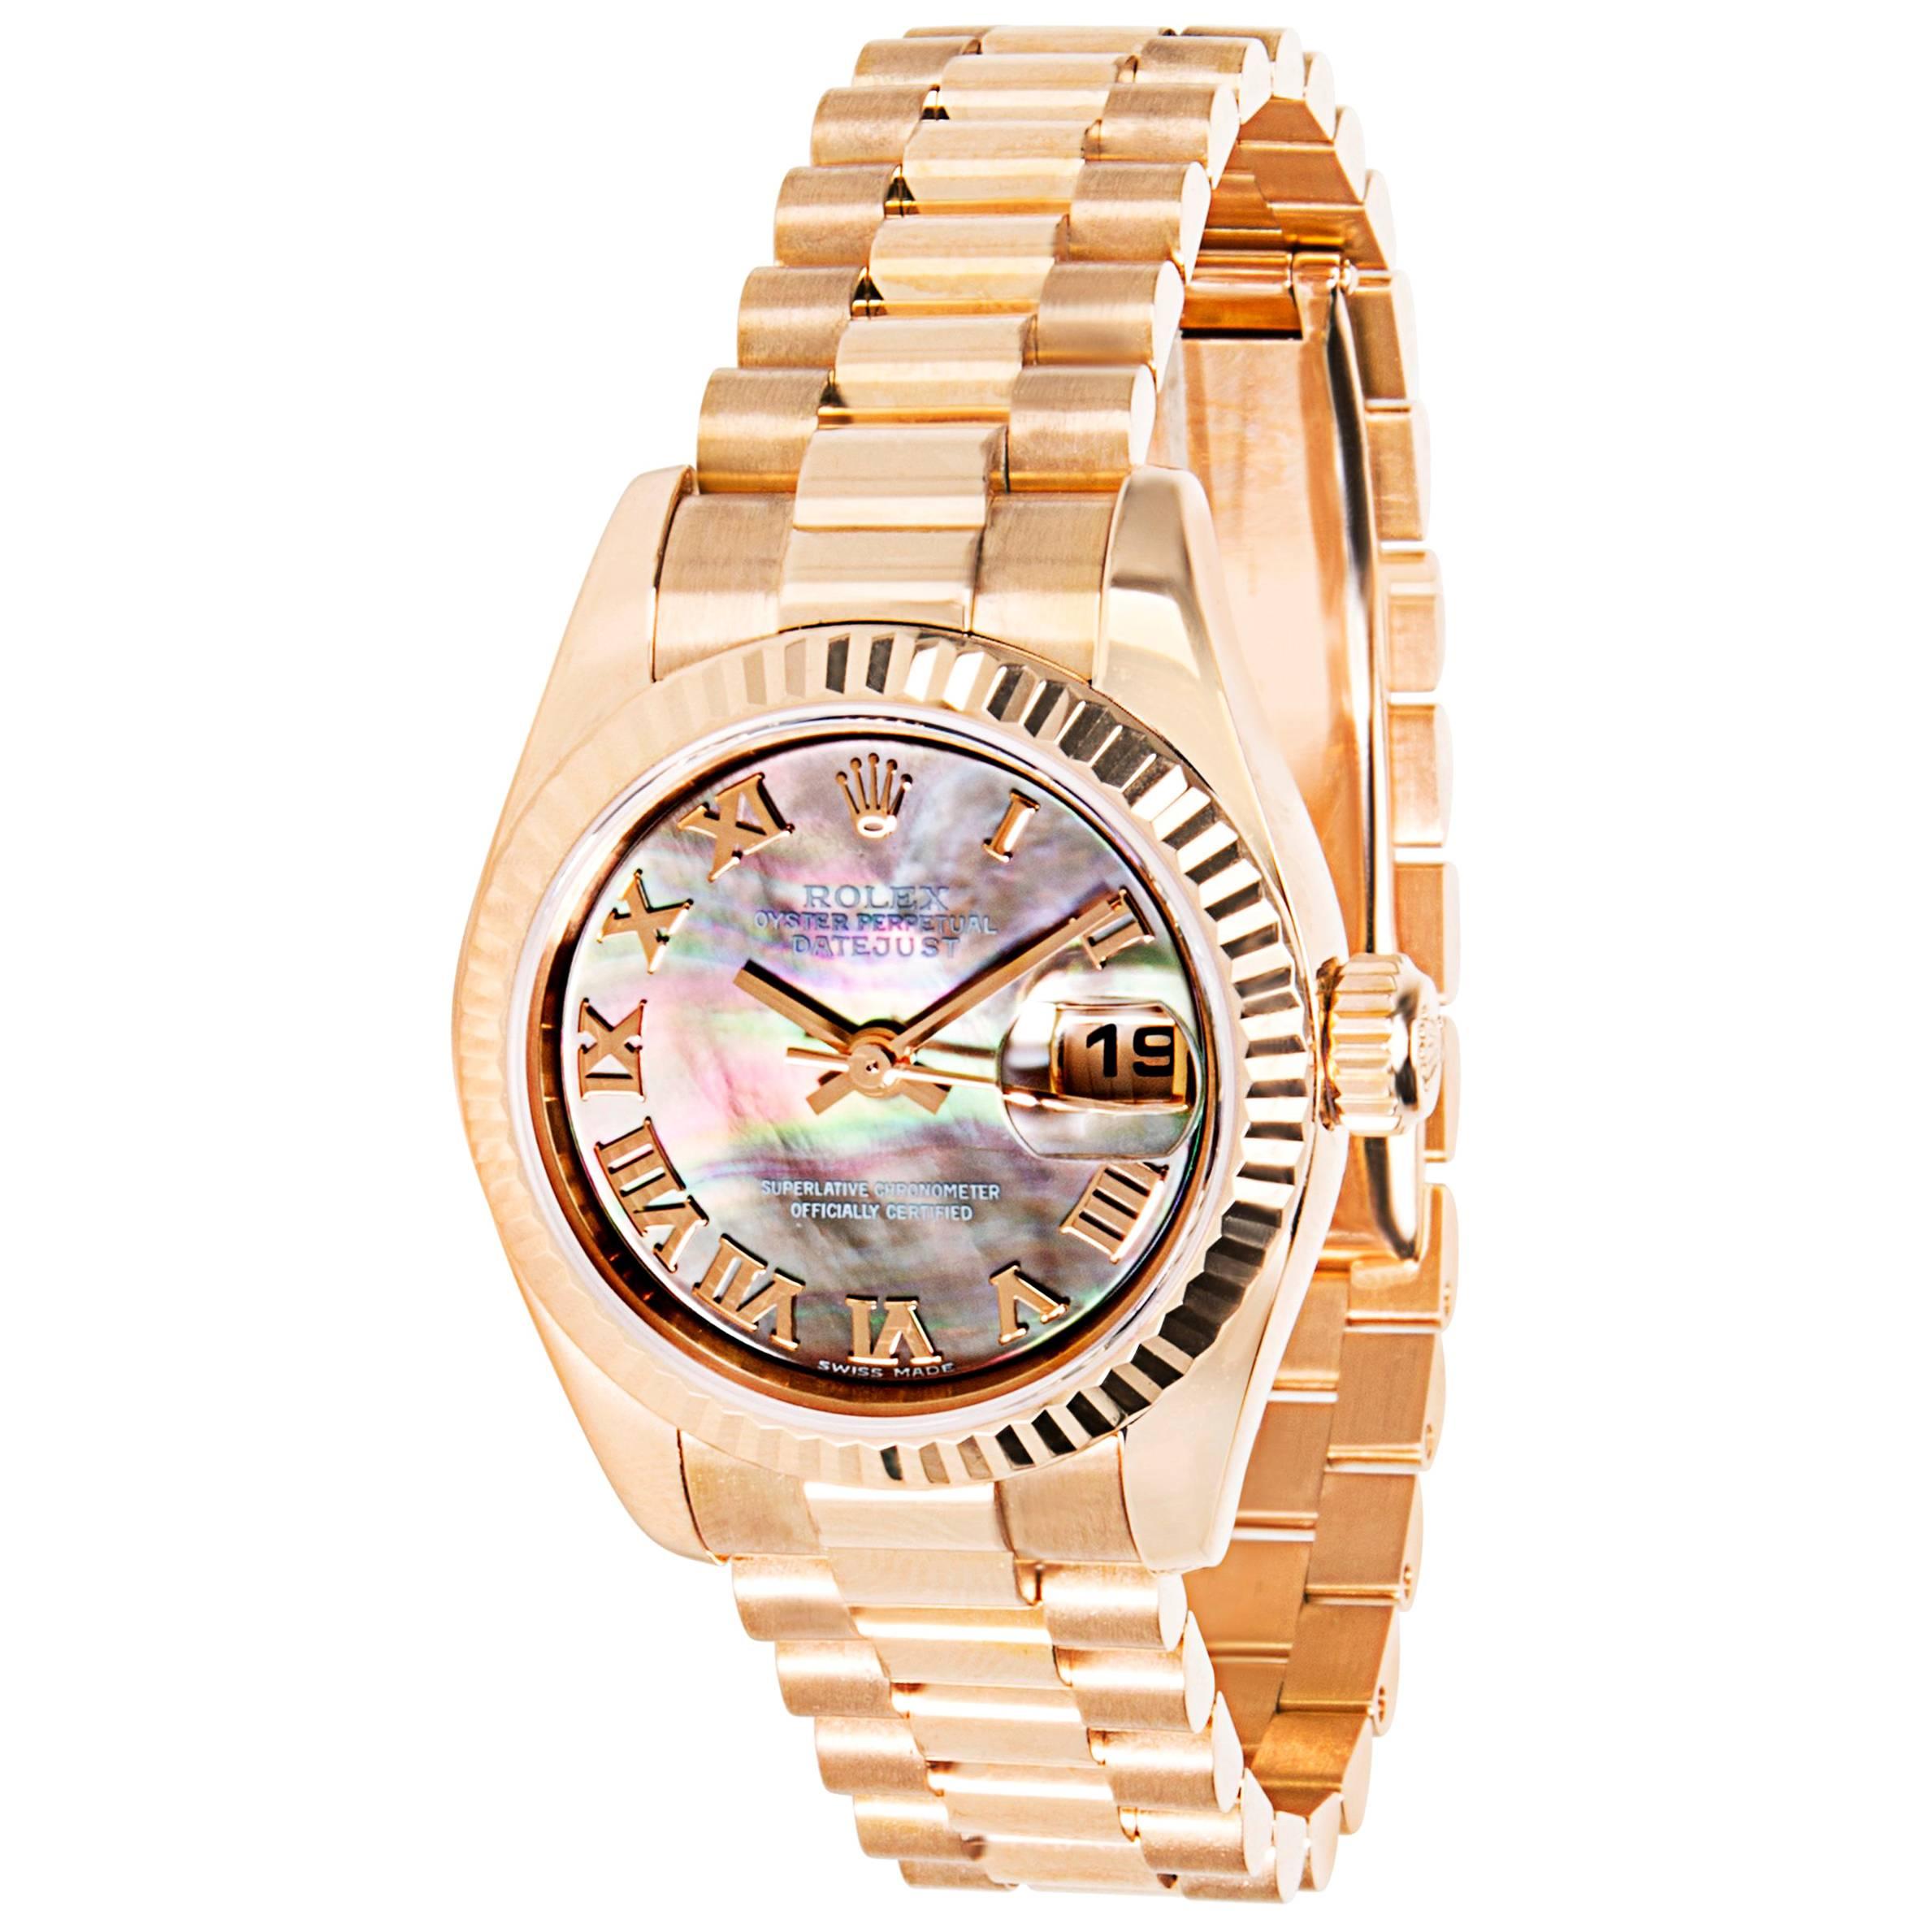 Rolex Datejust 179175 Ladies Chronometer Watch in Rose Gold